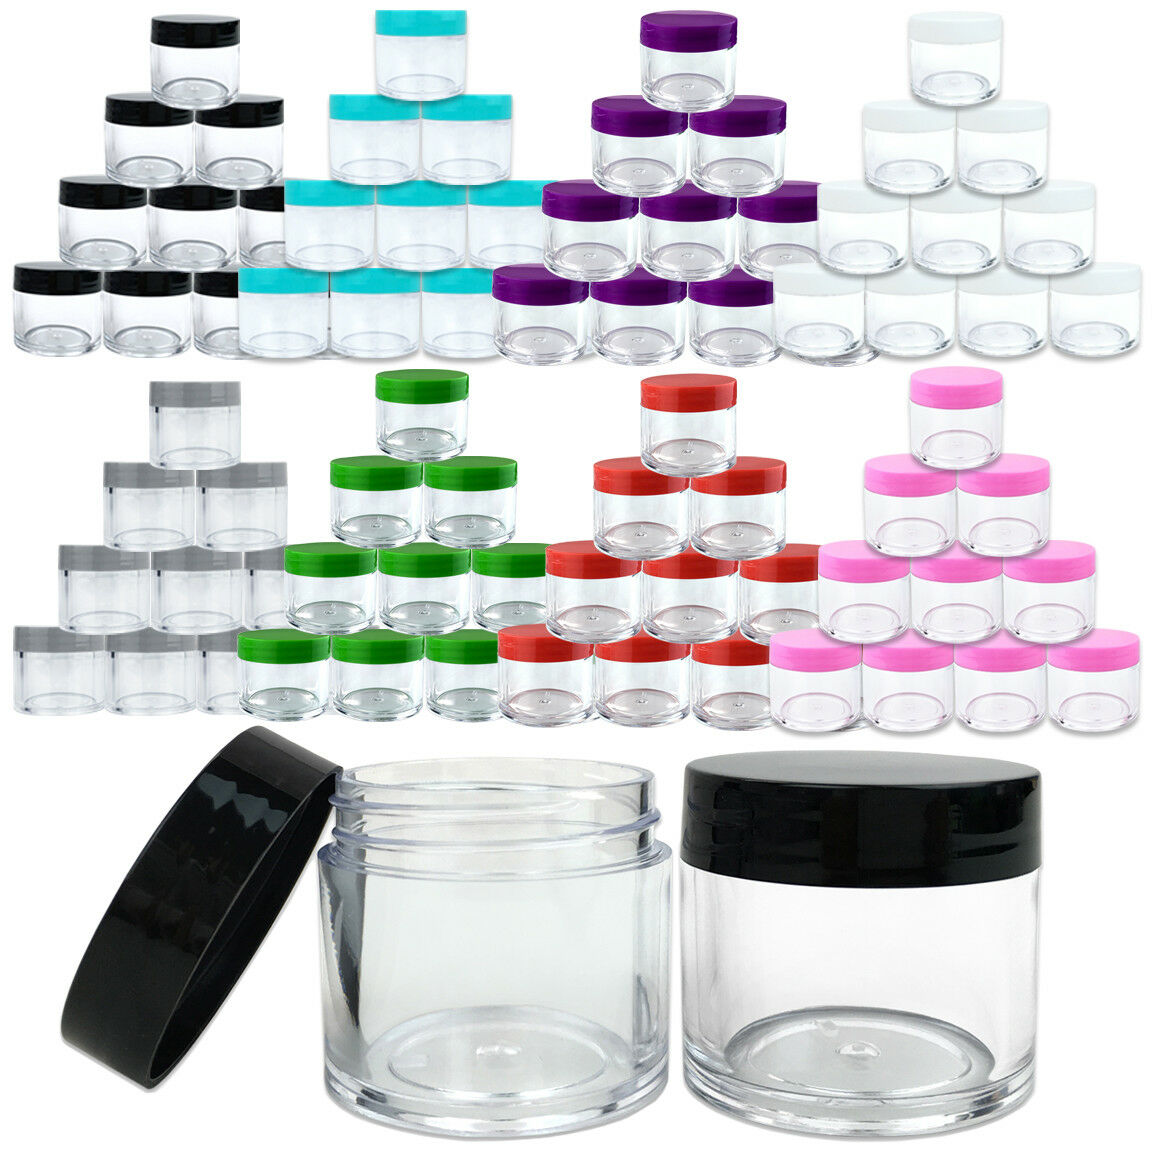 12 High Quality 1oz/30g/30ml Acrylic Plastic Jars Sample Containers Bpa Free